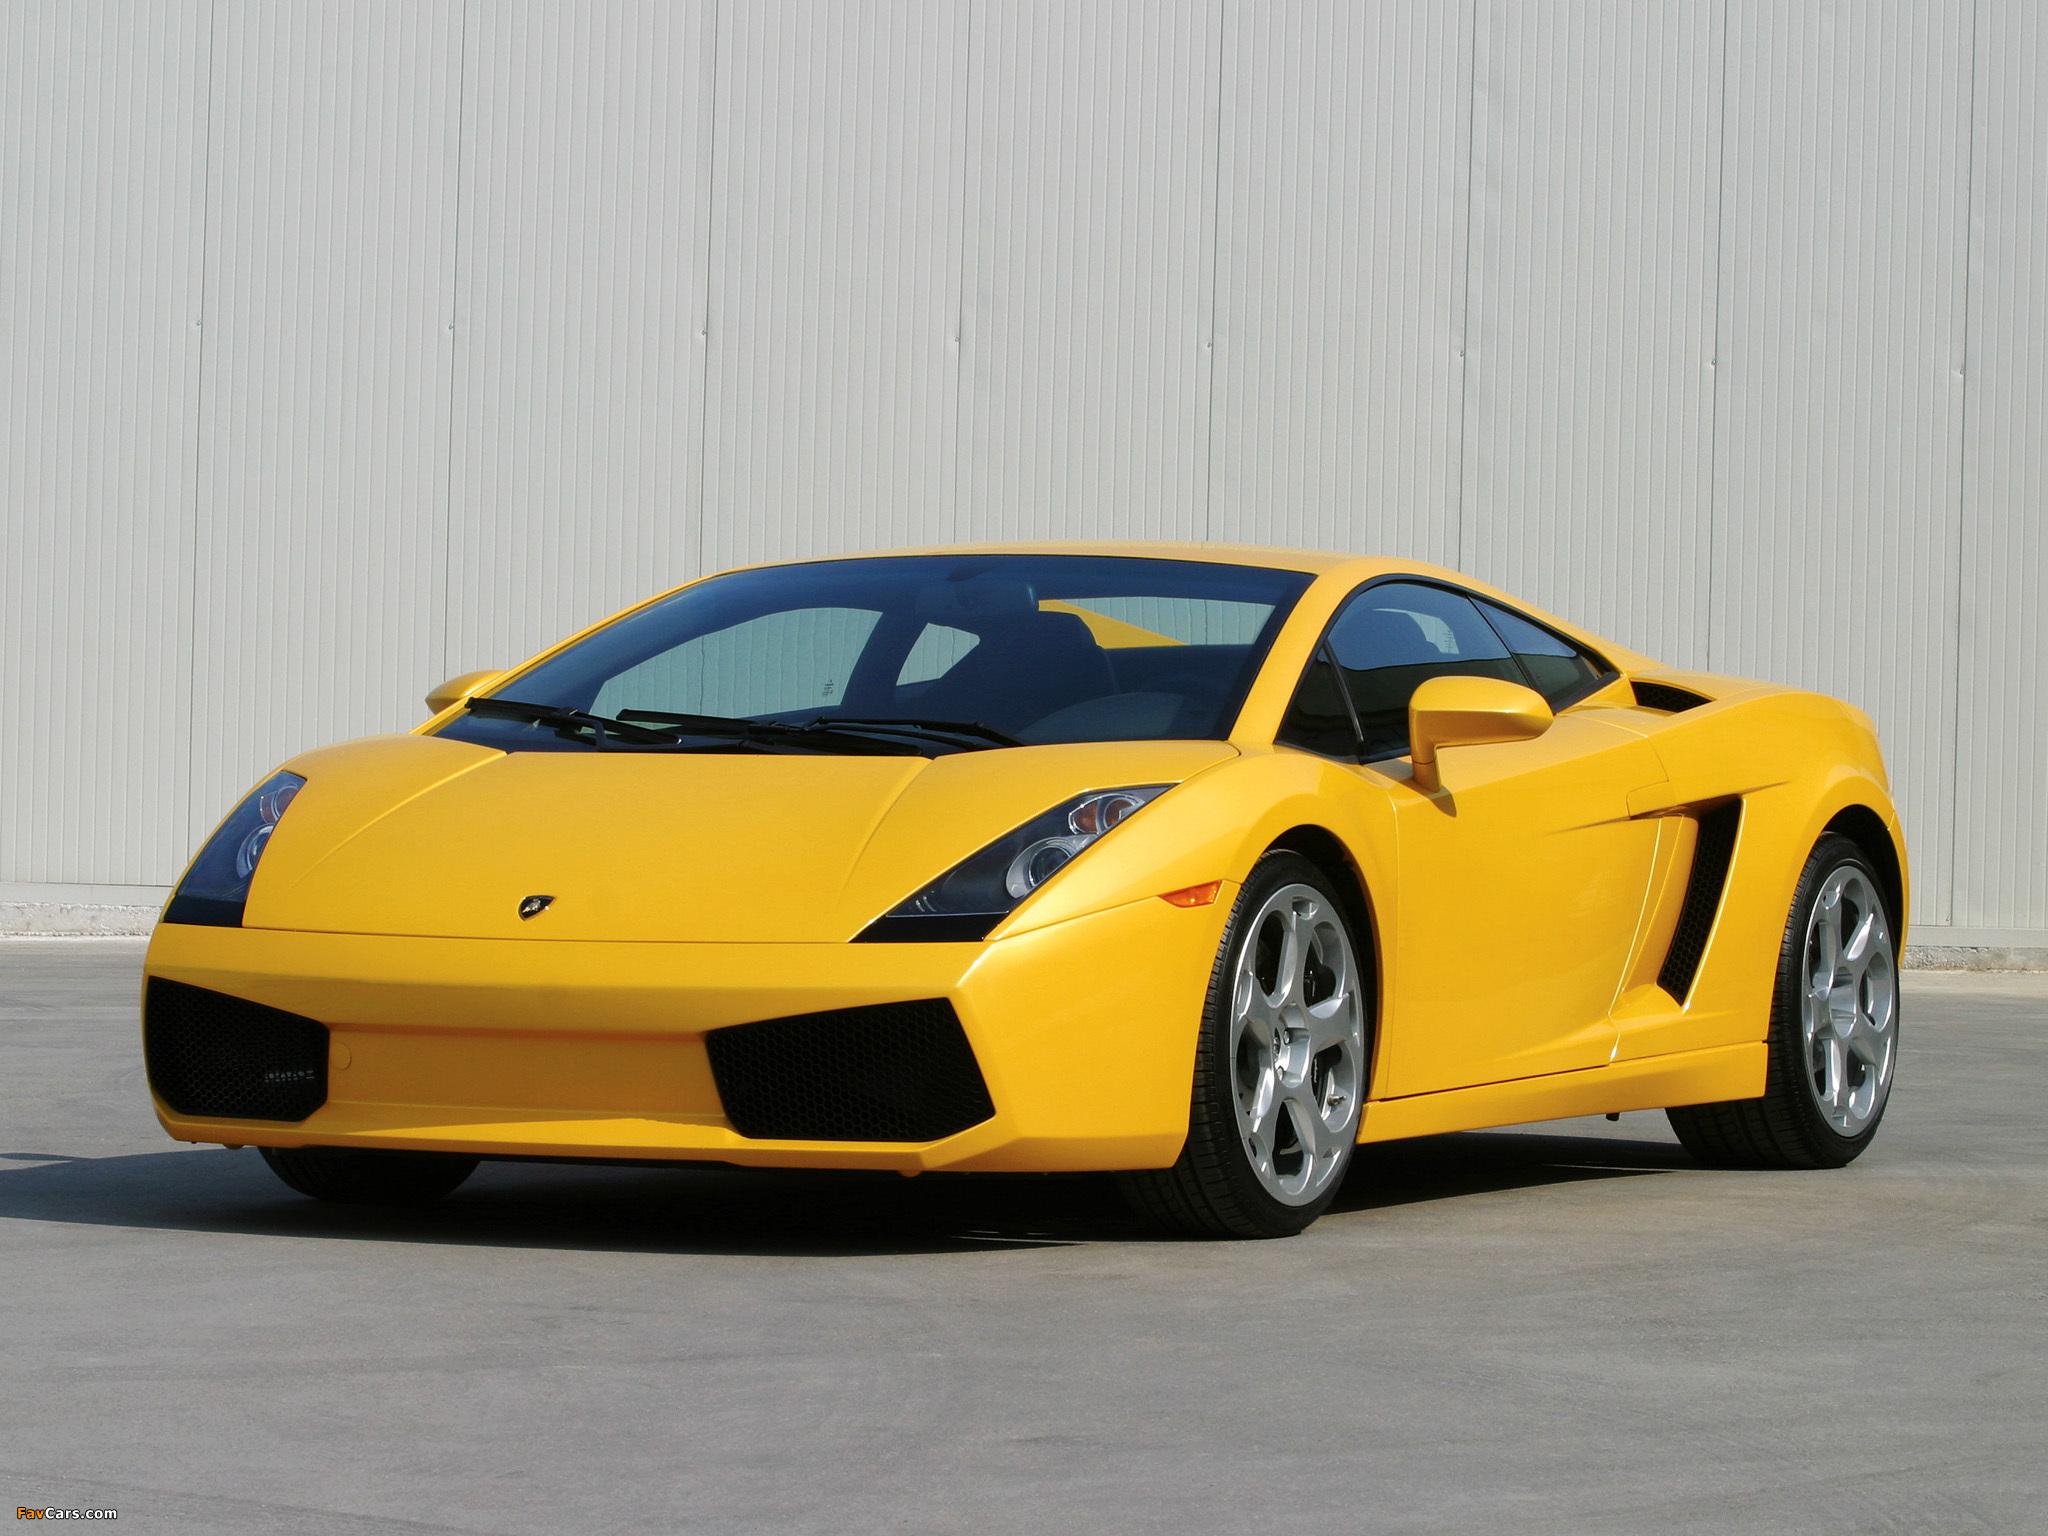 Lamborghini Gallardo 0-60, quarter mile, acceleration times -  